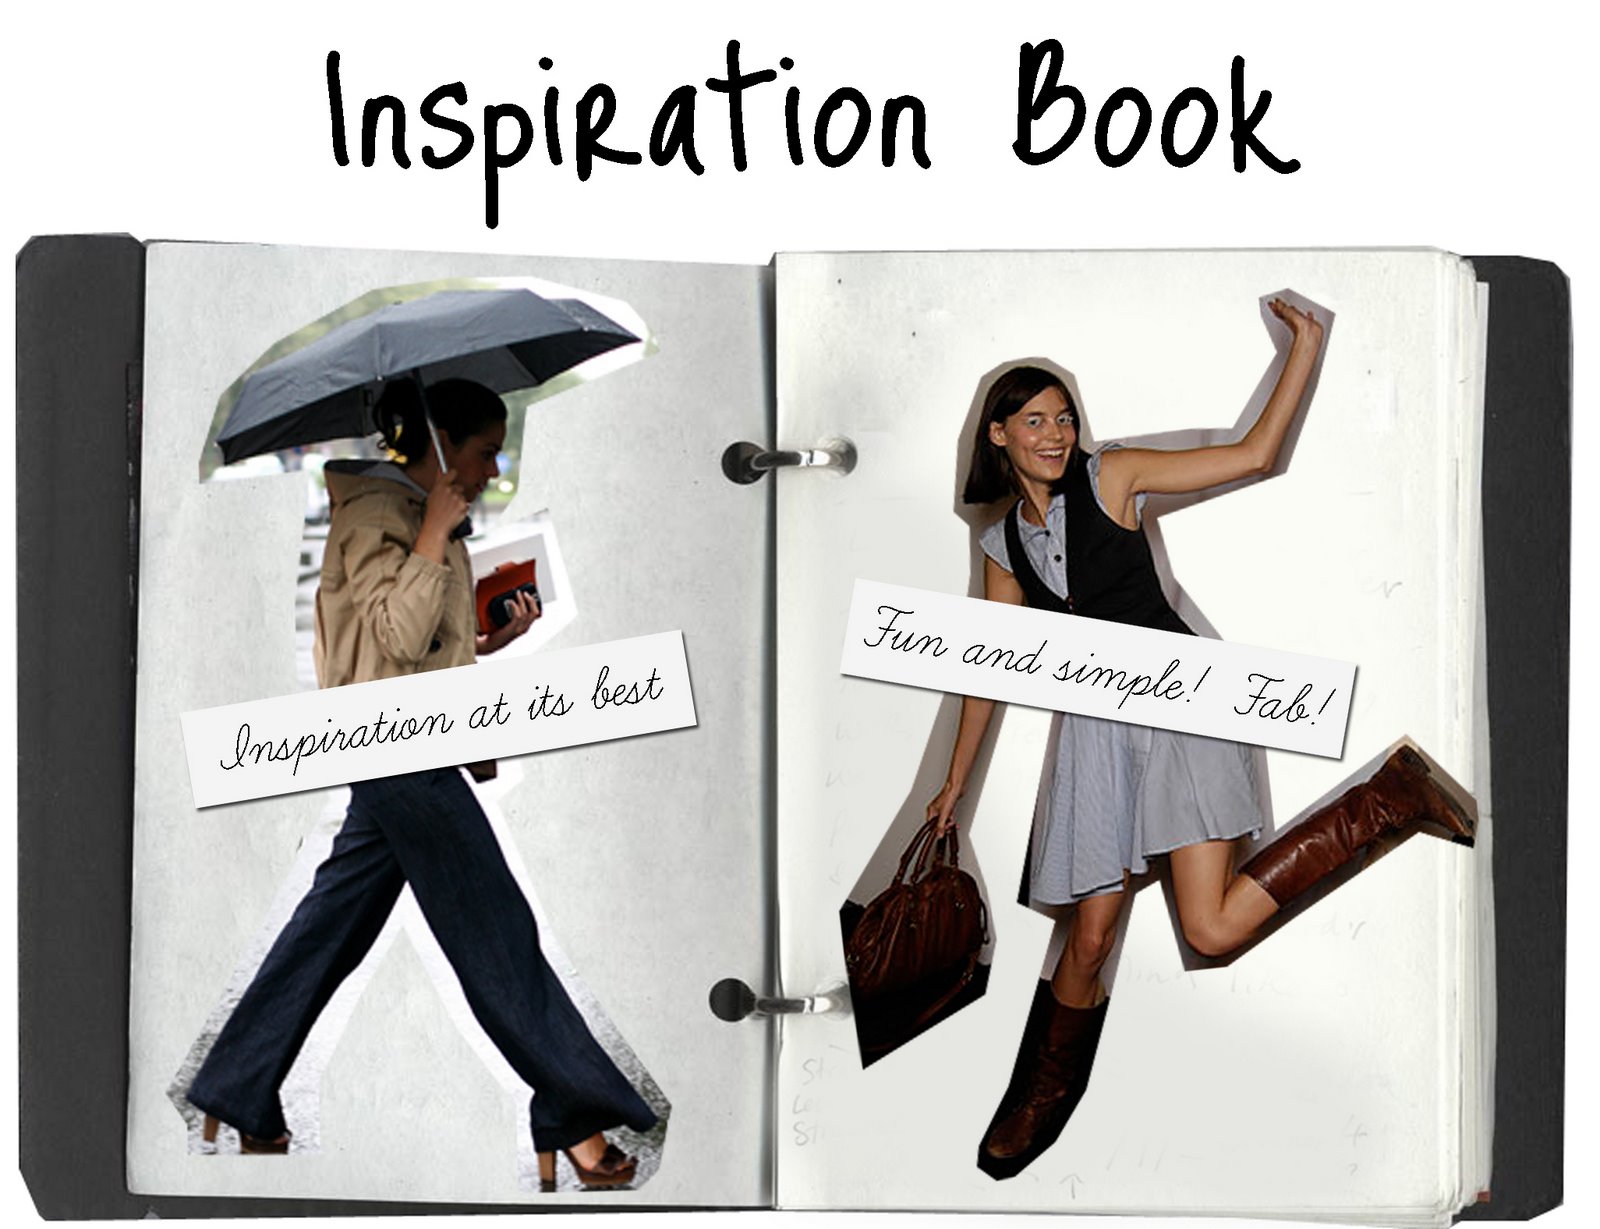 [inspiration+book.jpg]